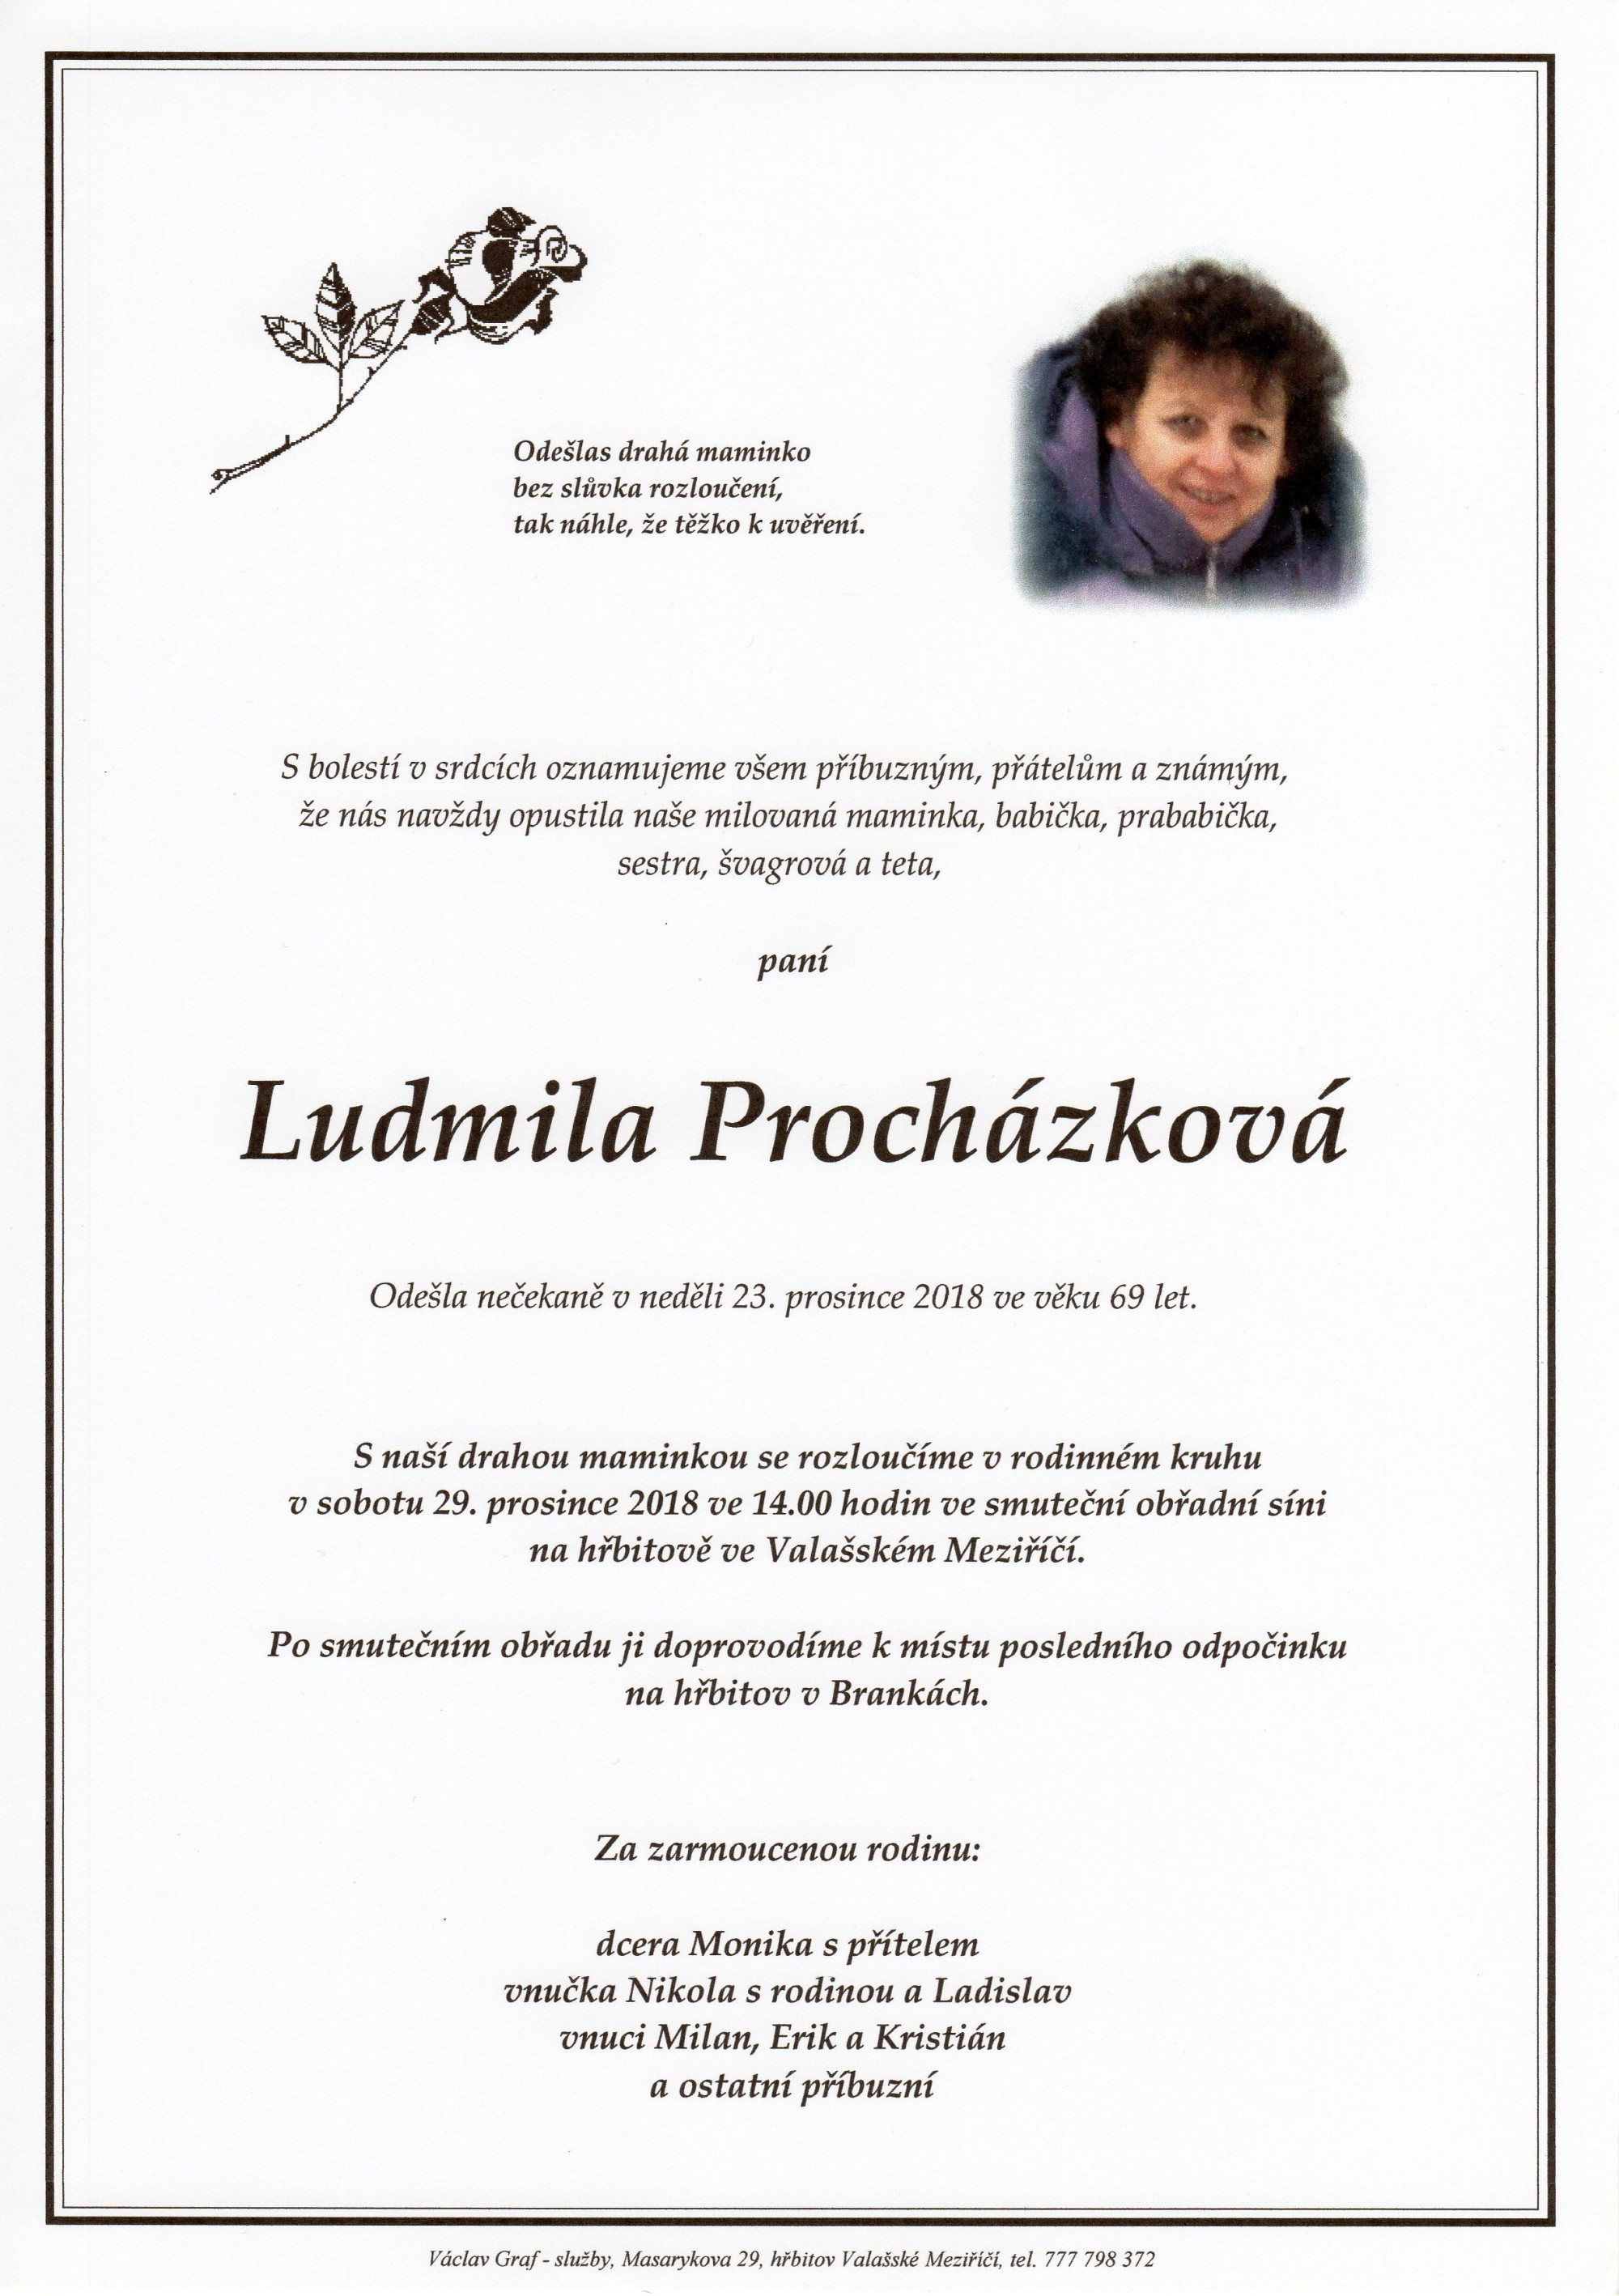 Ludmila Procházková